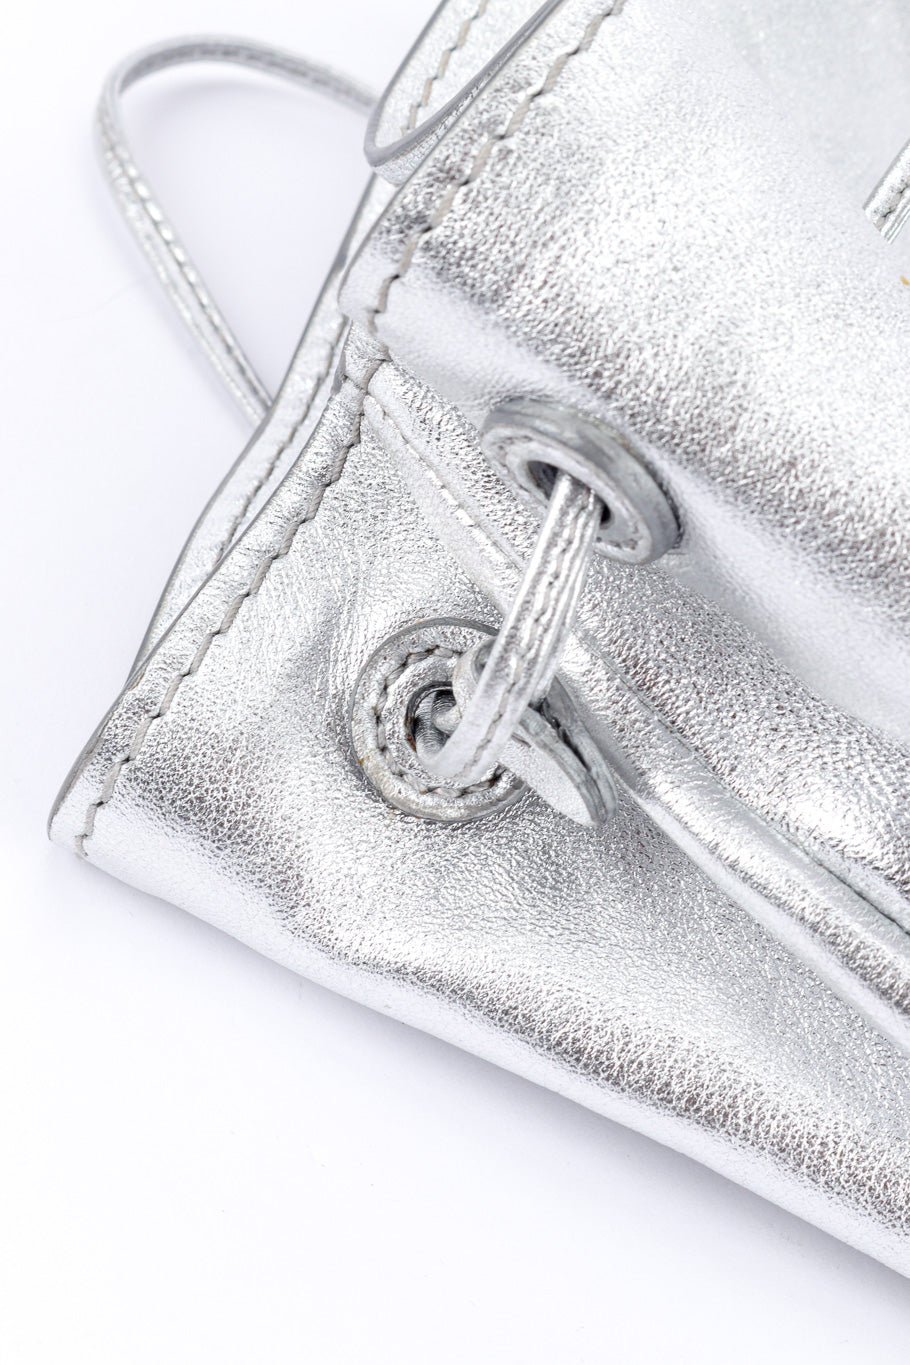 Miu Miu Metallic Drawstring Bag drawstring closeup @Recessla